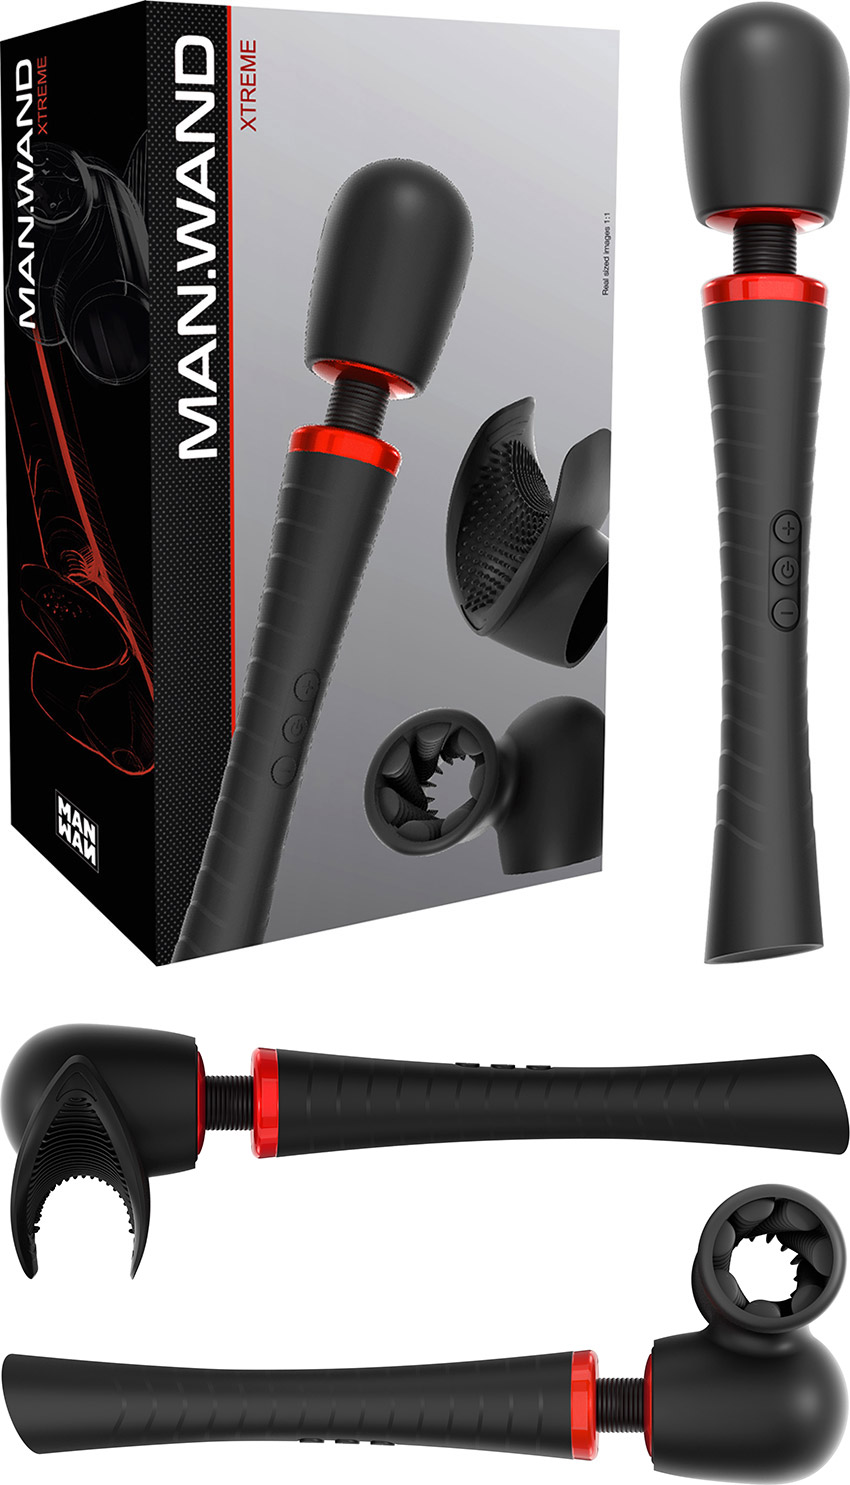 MAN.WAND Xtreme wand vibrator for masturbation